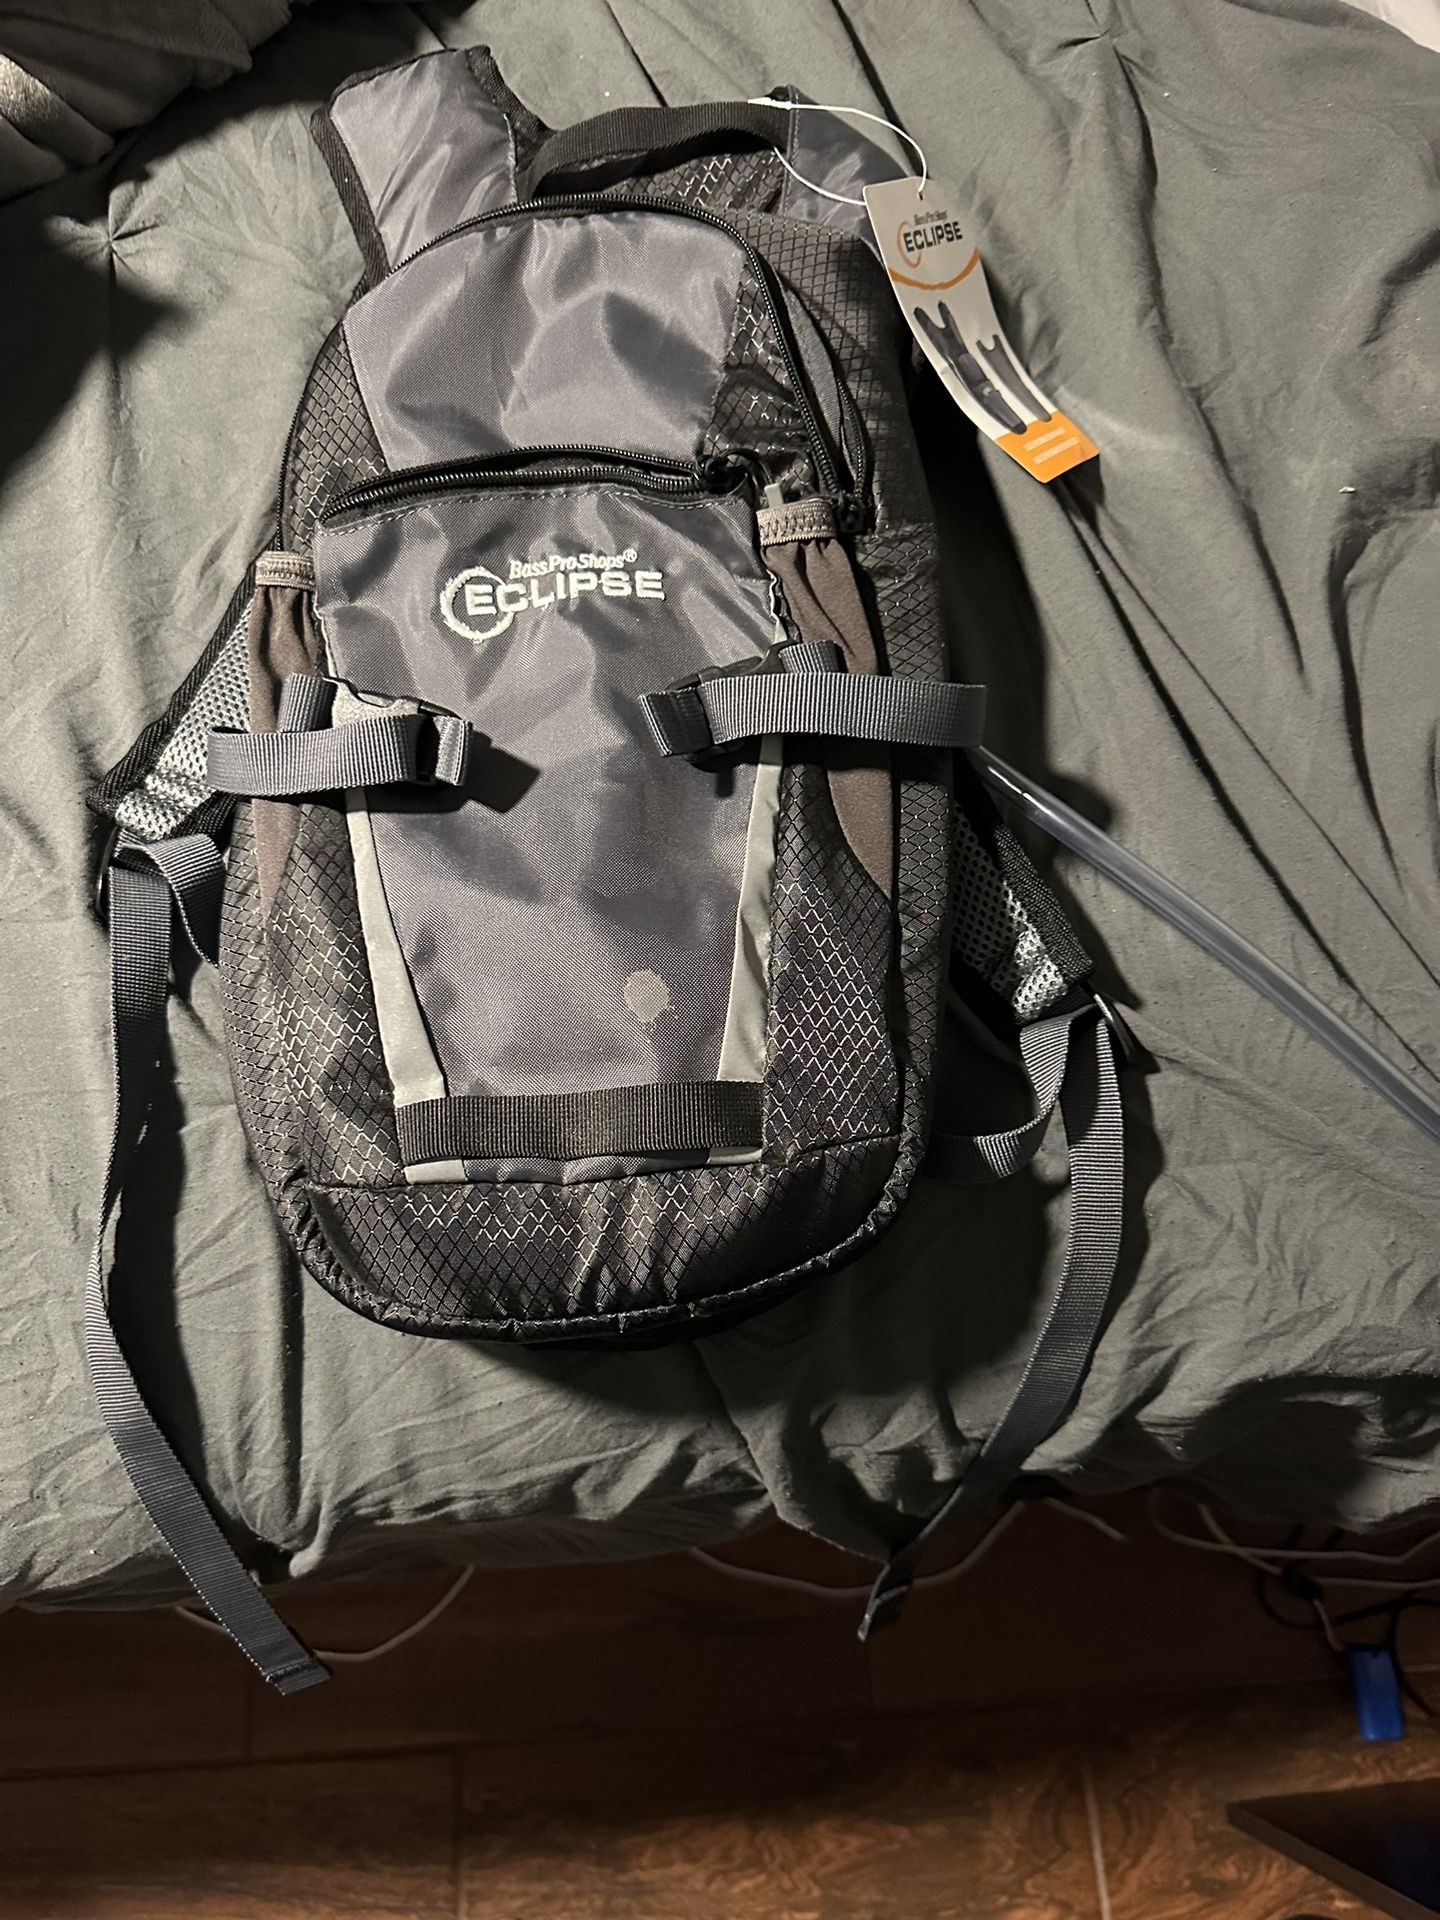 Camelbak Hydration Backpack